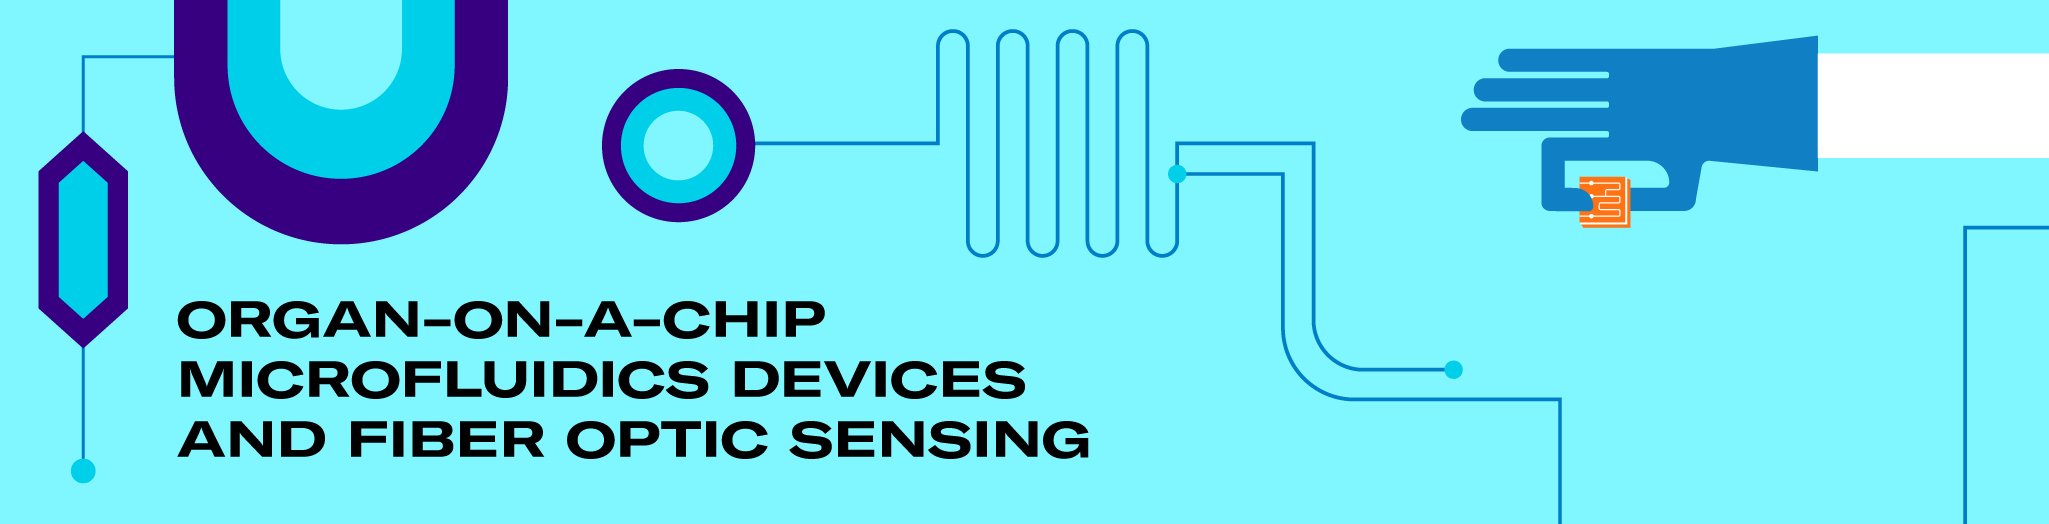 Organ-On-A-Chip Microfluidics Devices and Fiber Optic Sensing